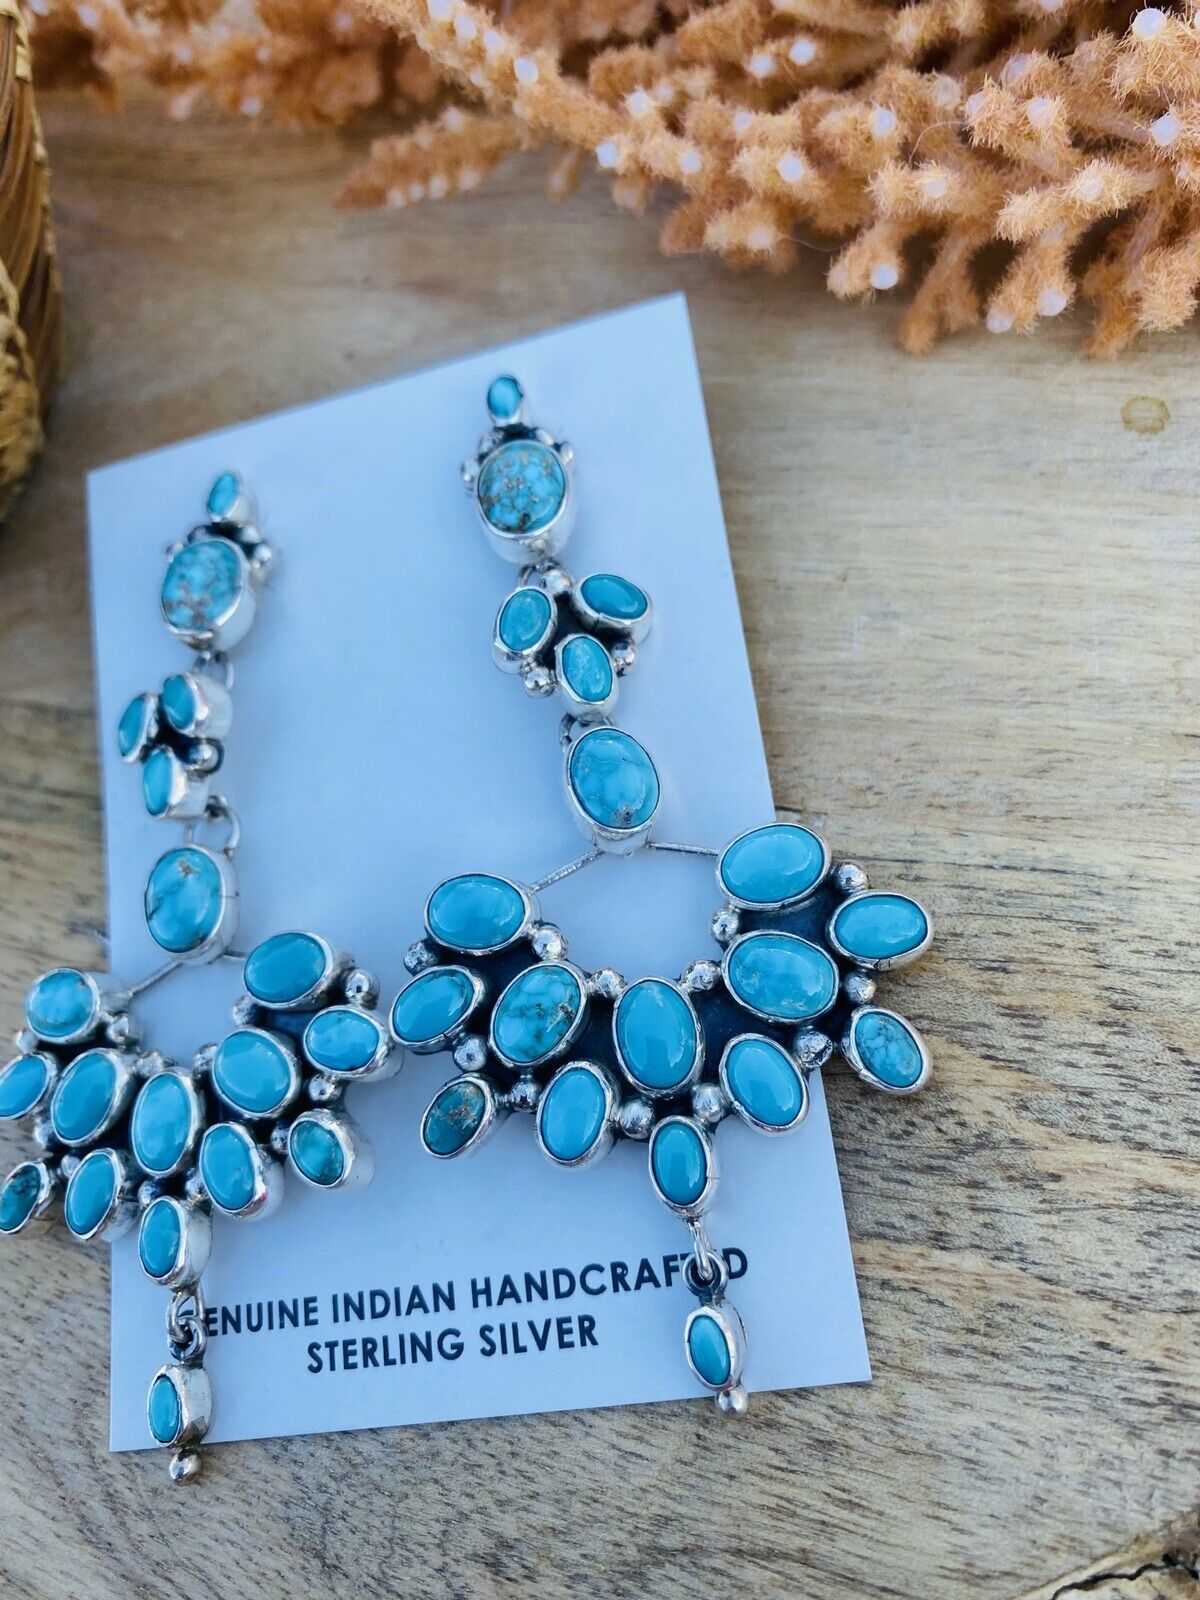 Vintage Navajo Turquoise & Sterling Silver Dangle Earrings